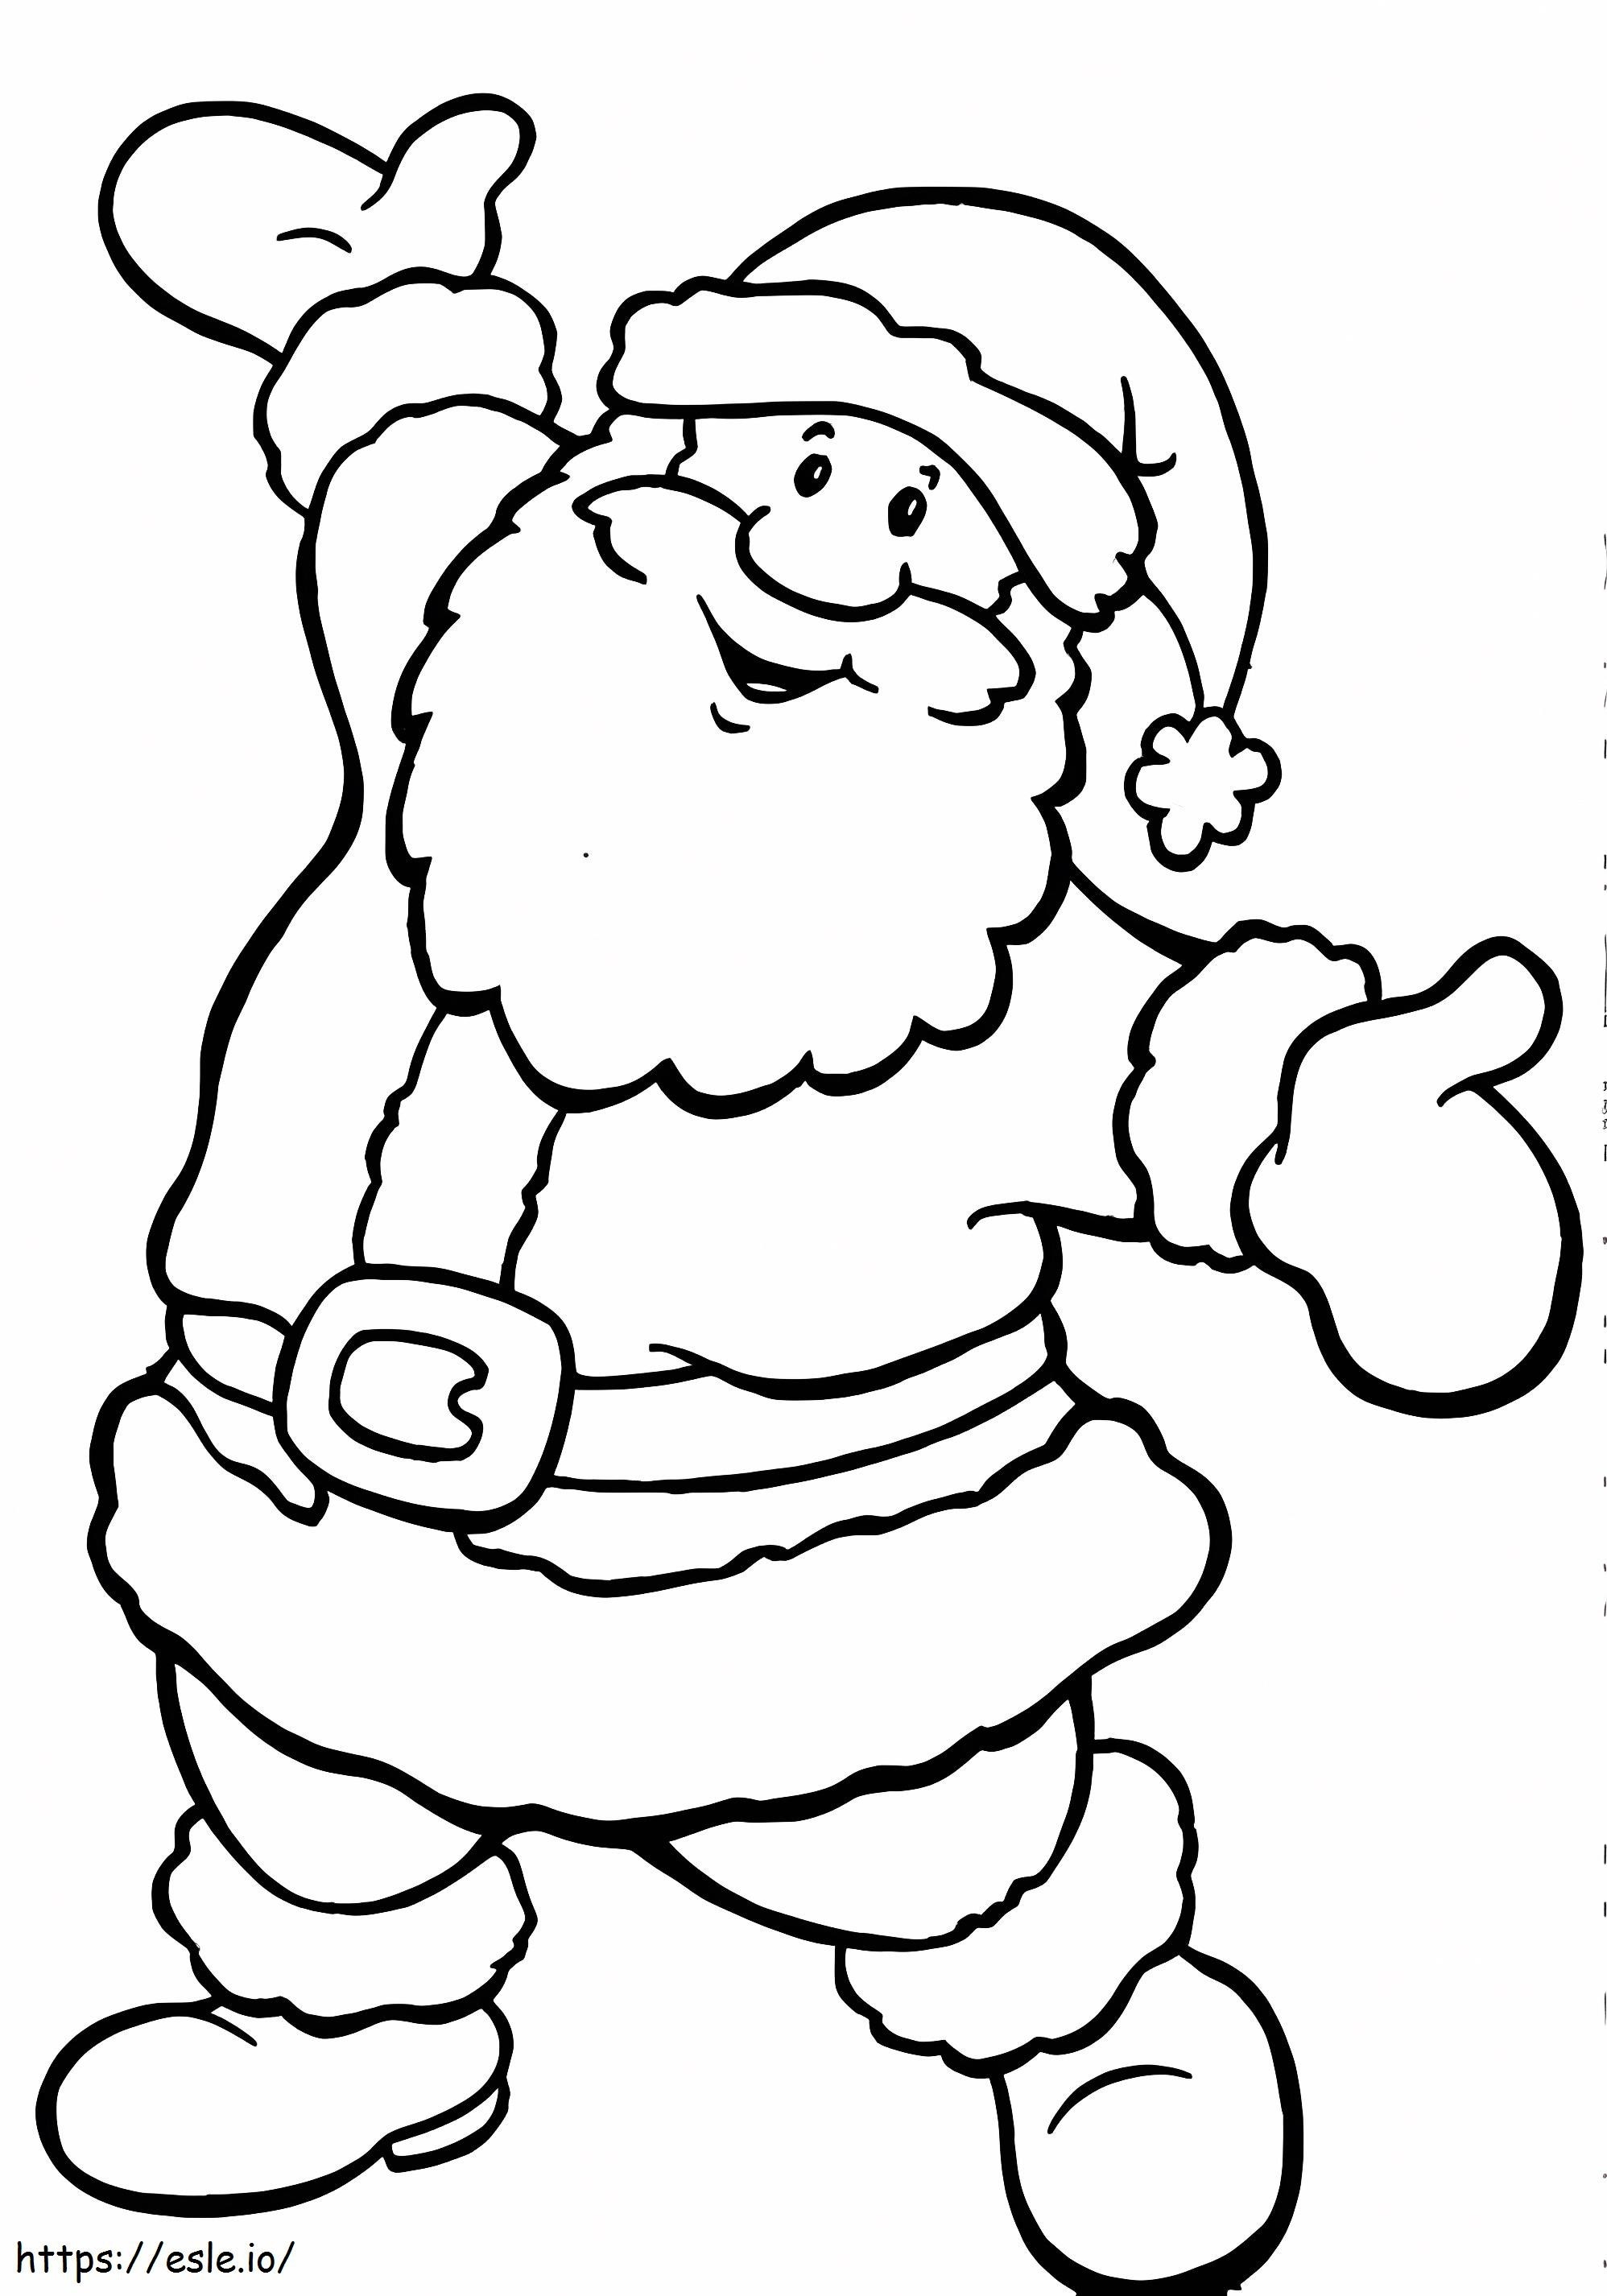 Santa Claus Smiling coloring page